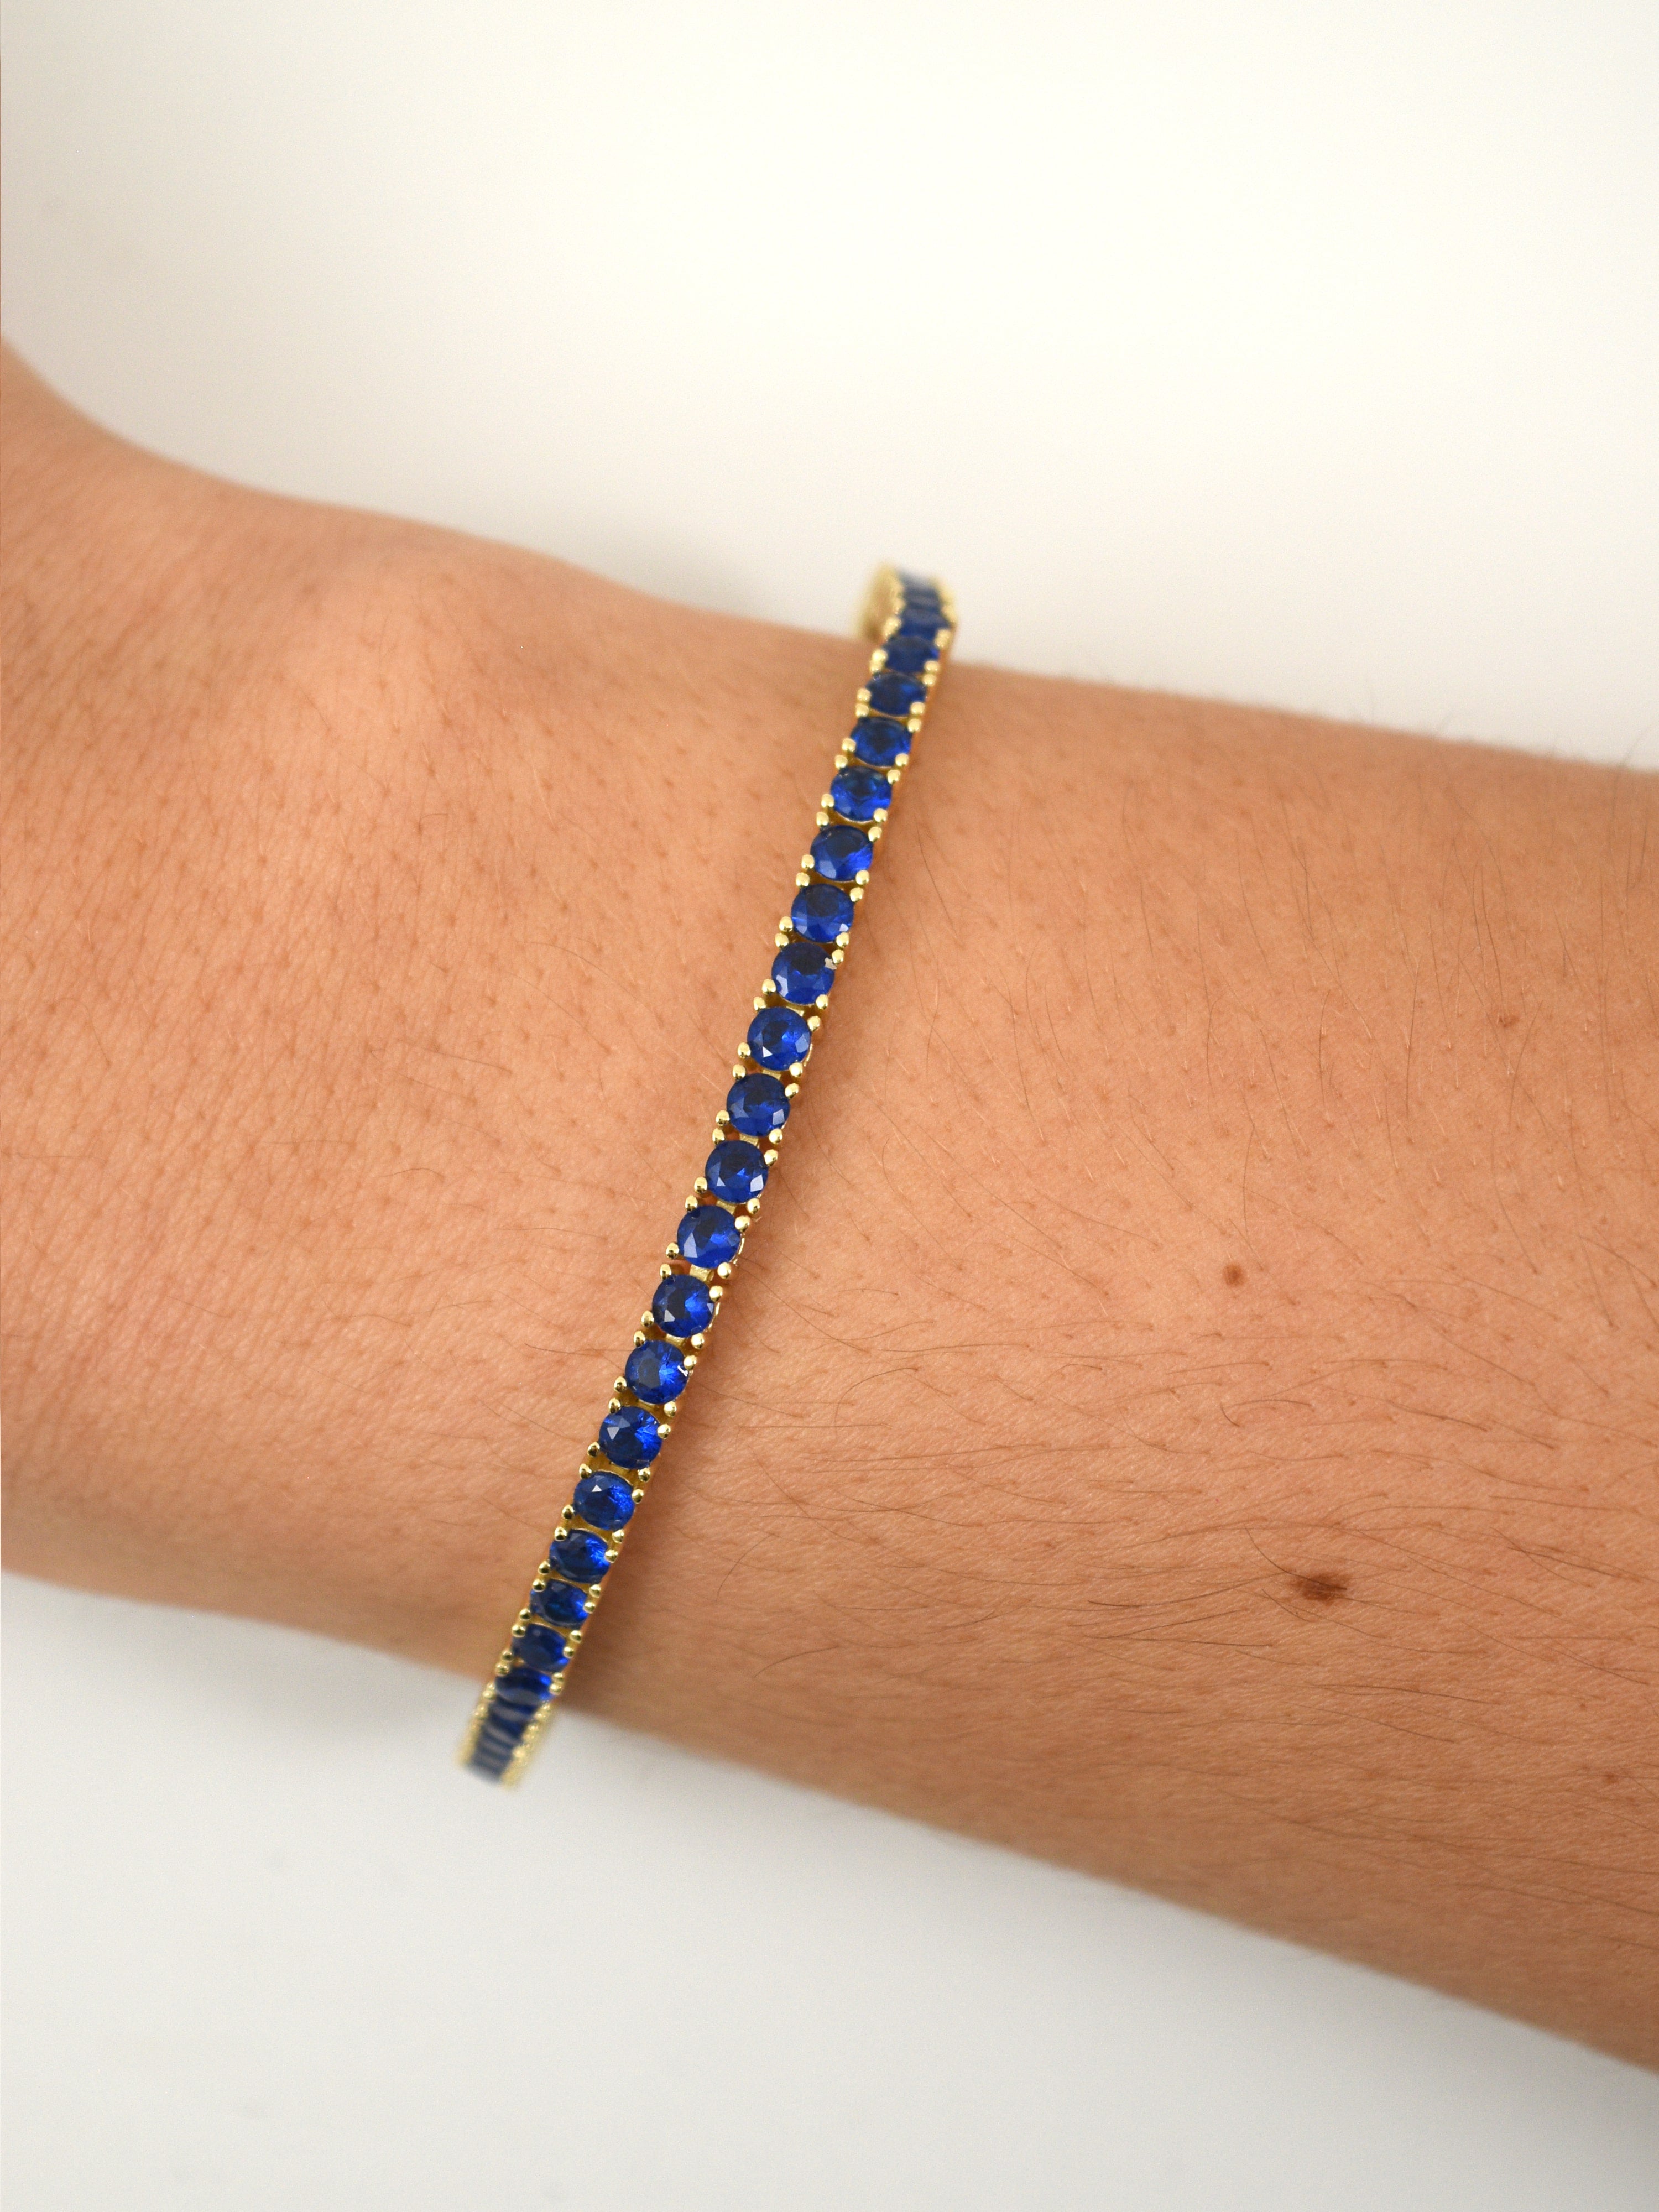 Starla Tennis Bracelet in Blue Crystals